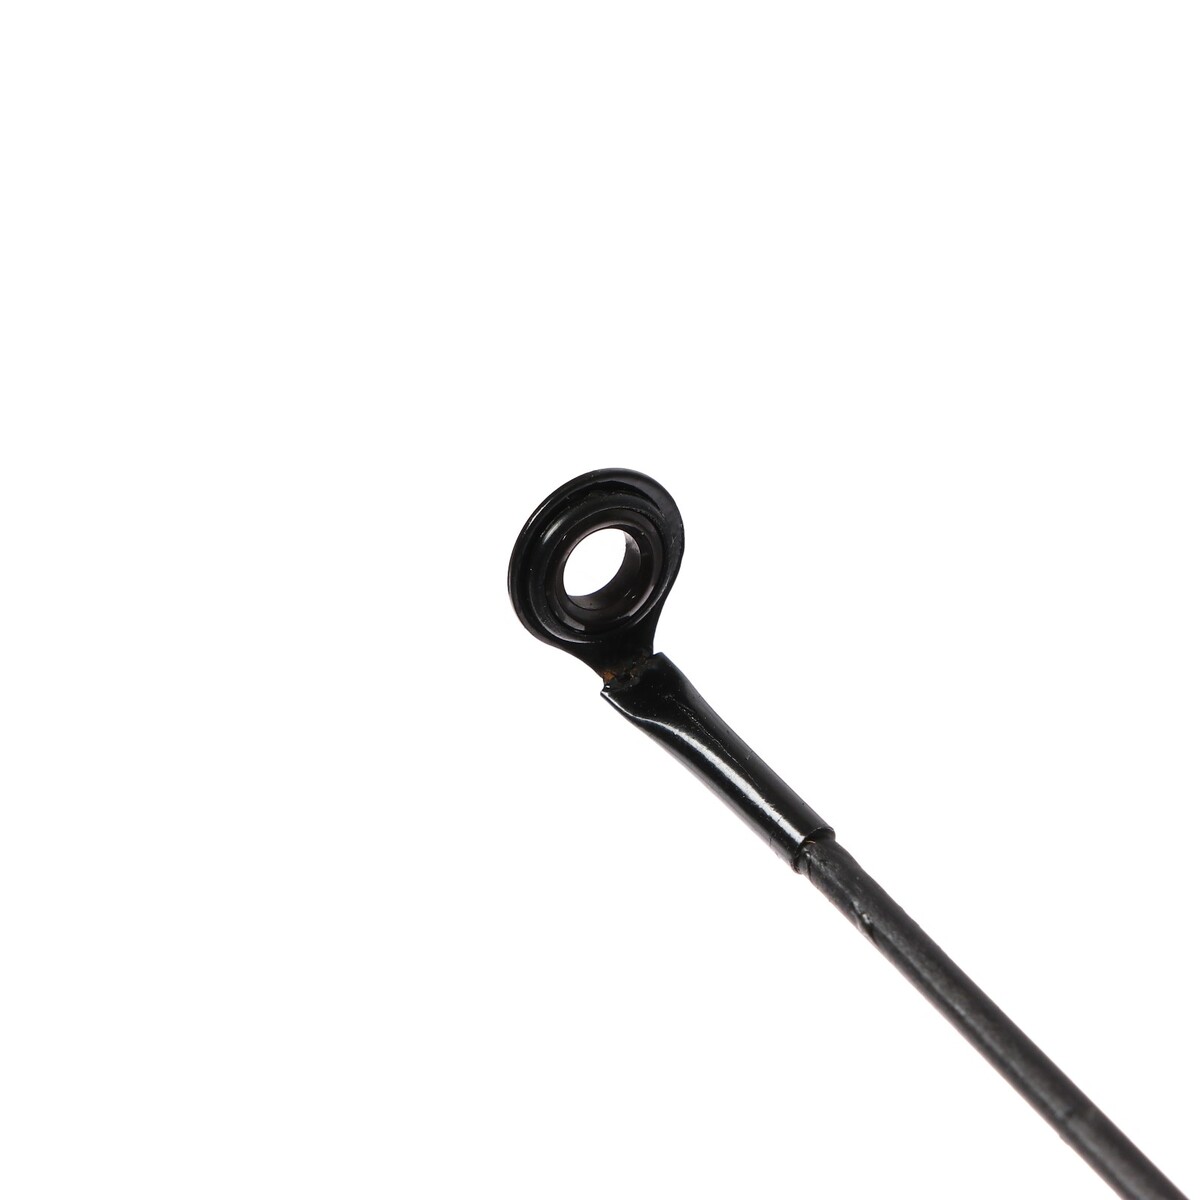 фото Удочка зимняя, ручка неопрен, диаметр катушки 9.5 см, hfb-1f no brand